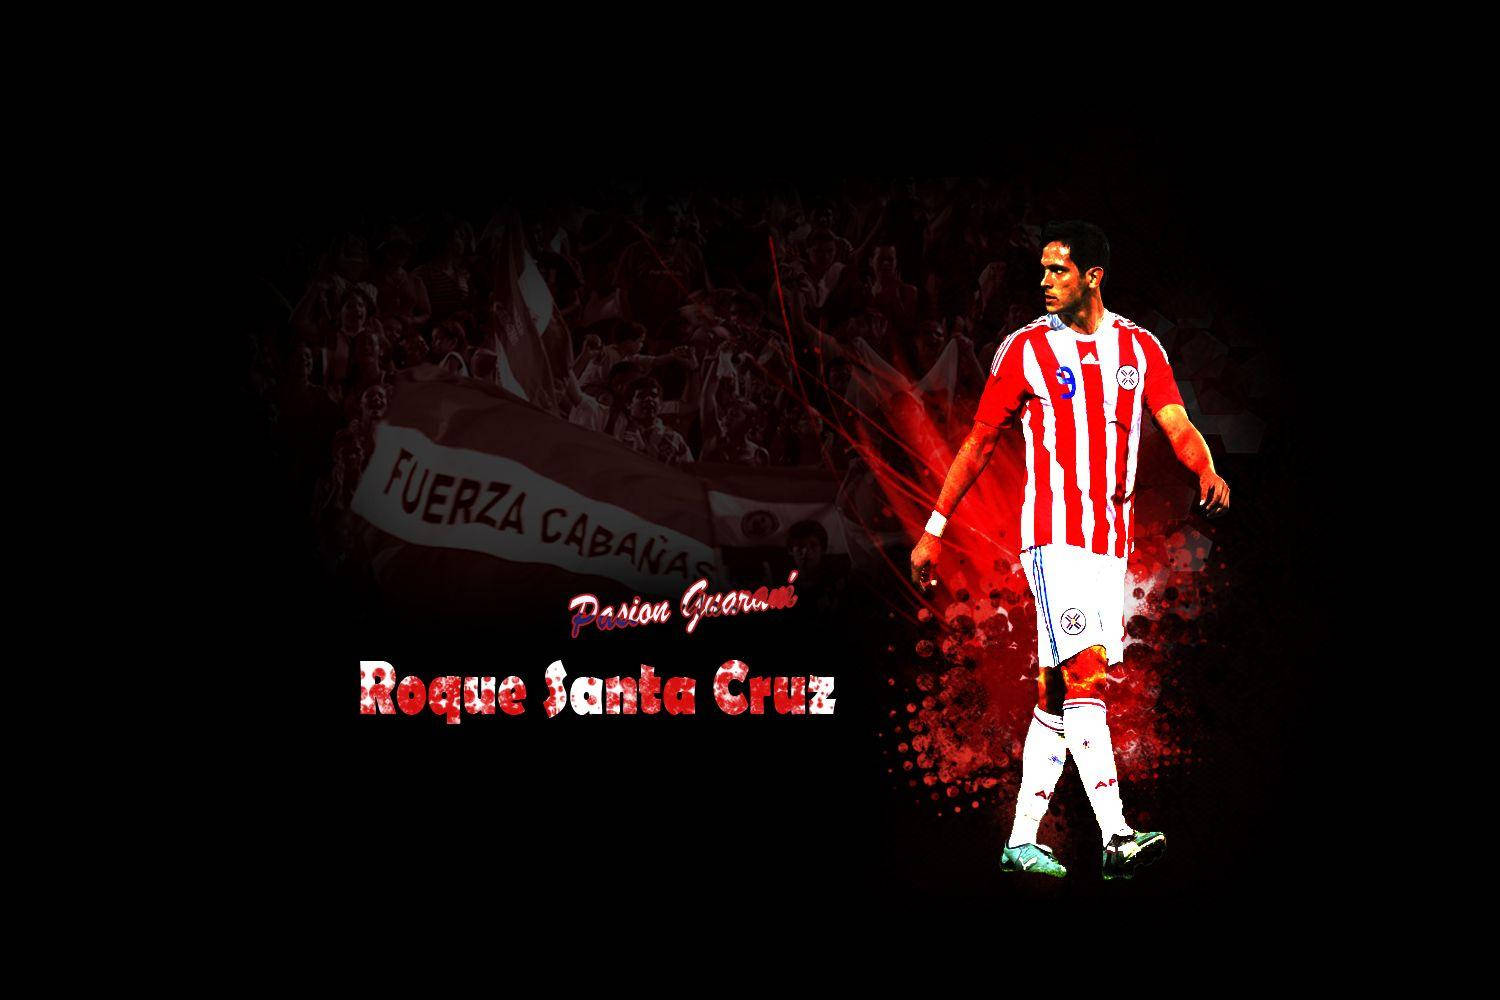 Paraguay Fodboldspiller Roque Wallpaper